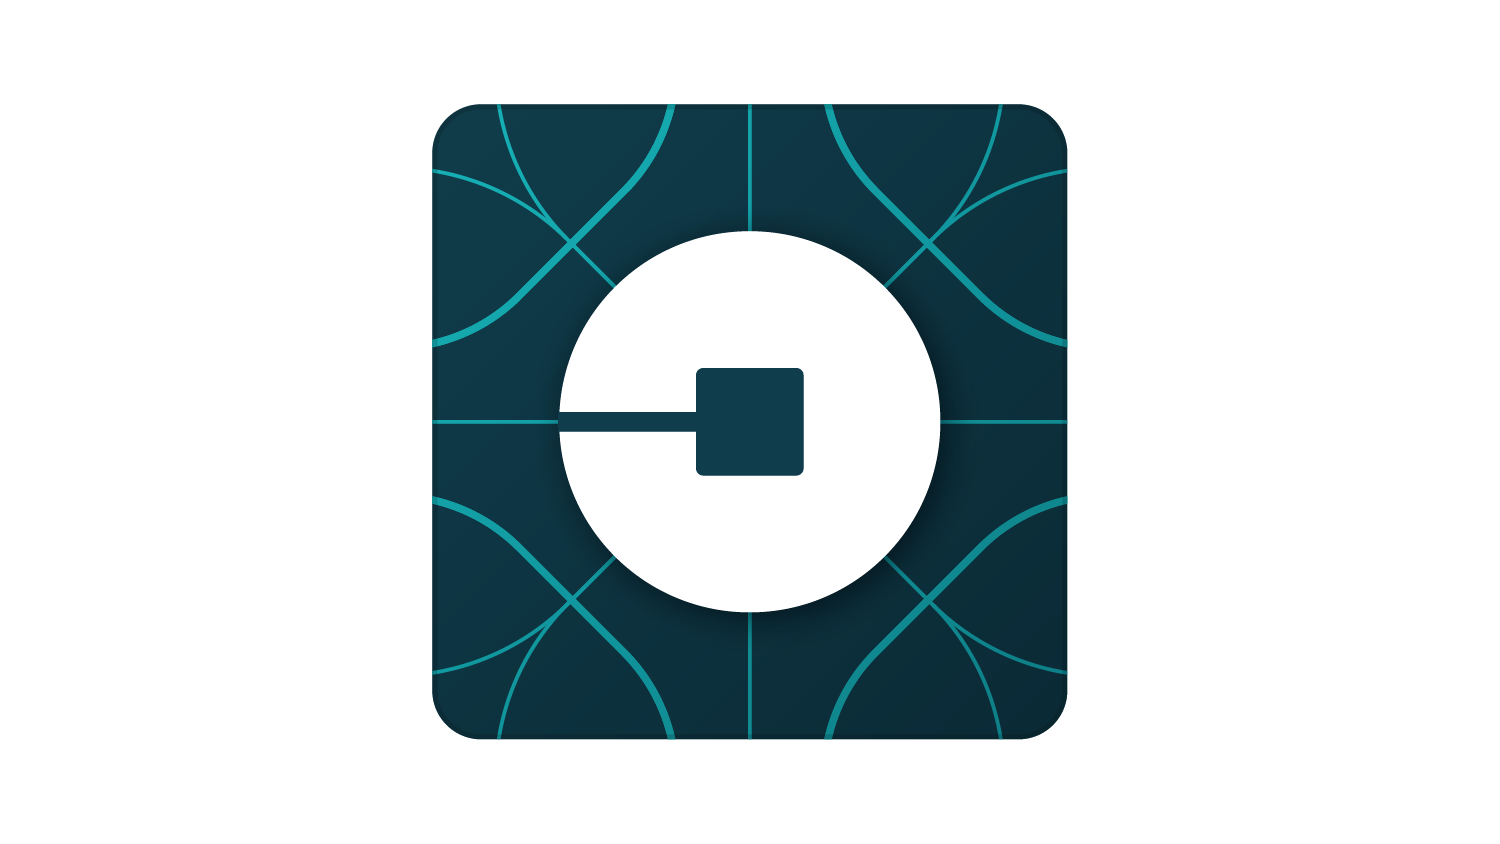 Uber changed its original app